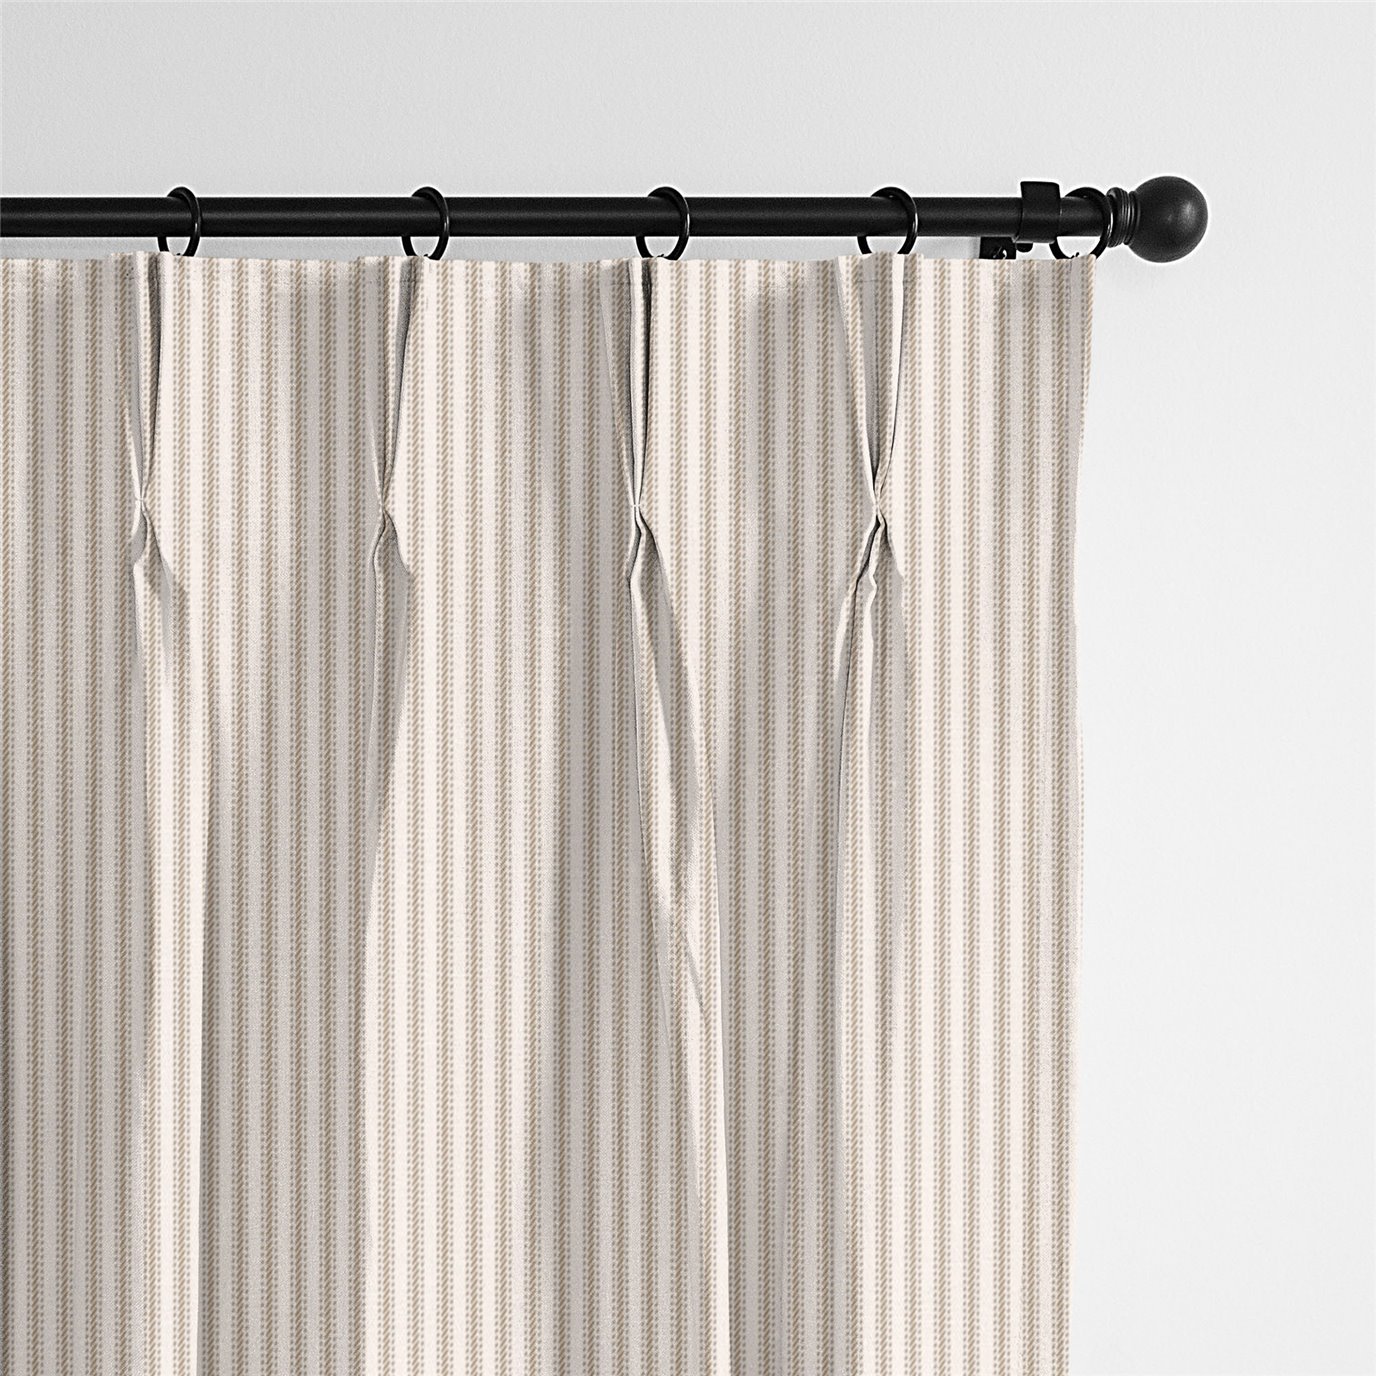 Cruz Ticking Stripes Taupe/Ivory Pinch Pleat Drapery Panel - Pair - Size 40"x132"